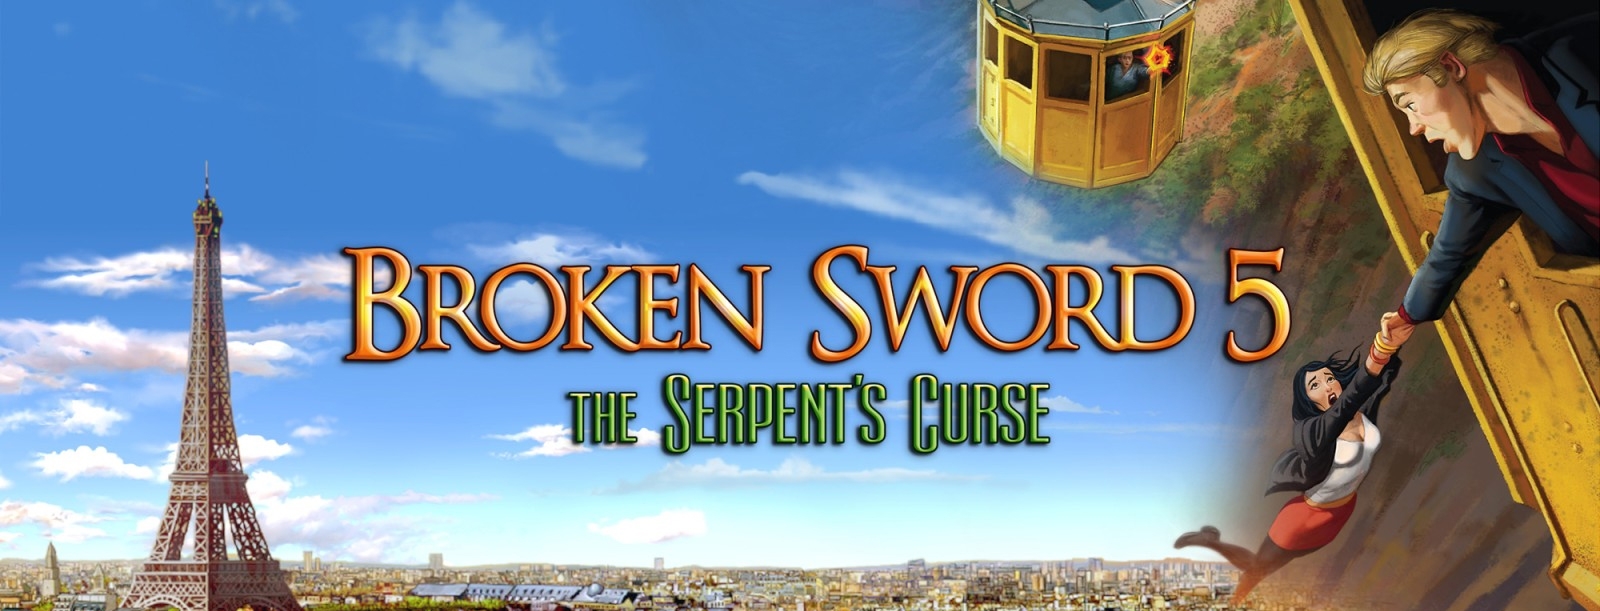 Banner Broken Sword 5 The Serpents Curse